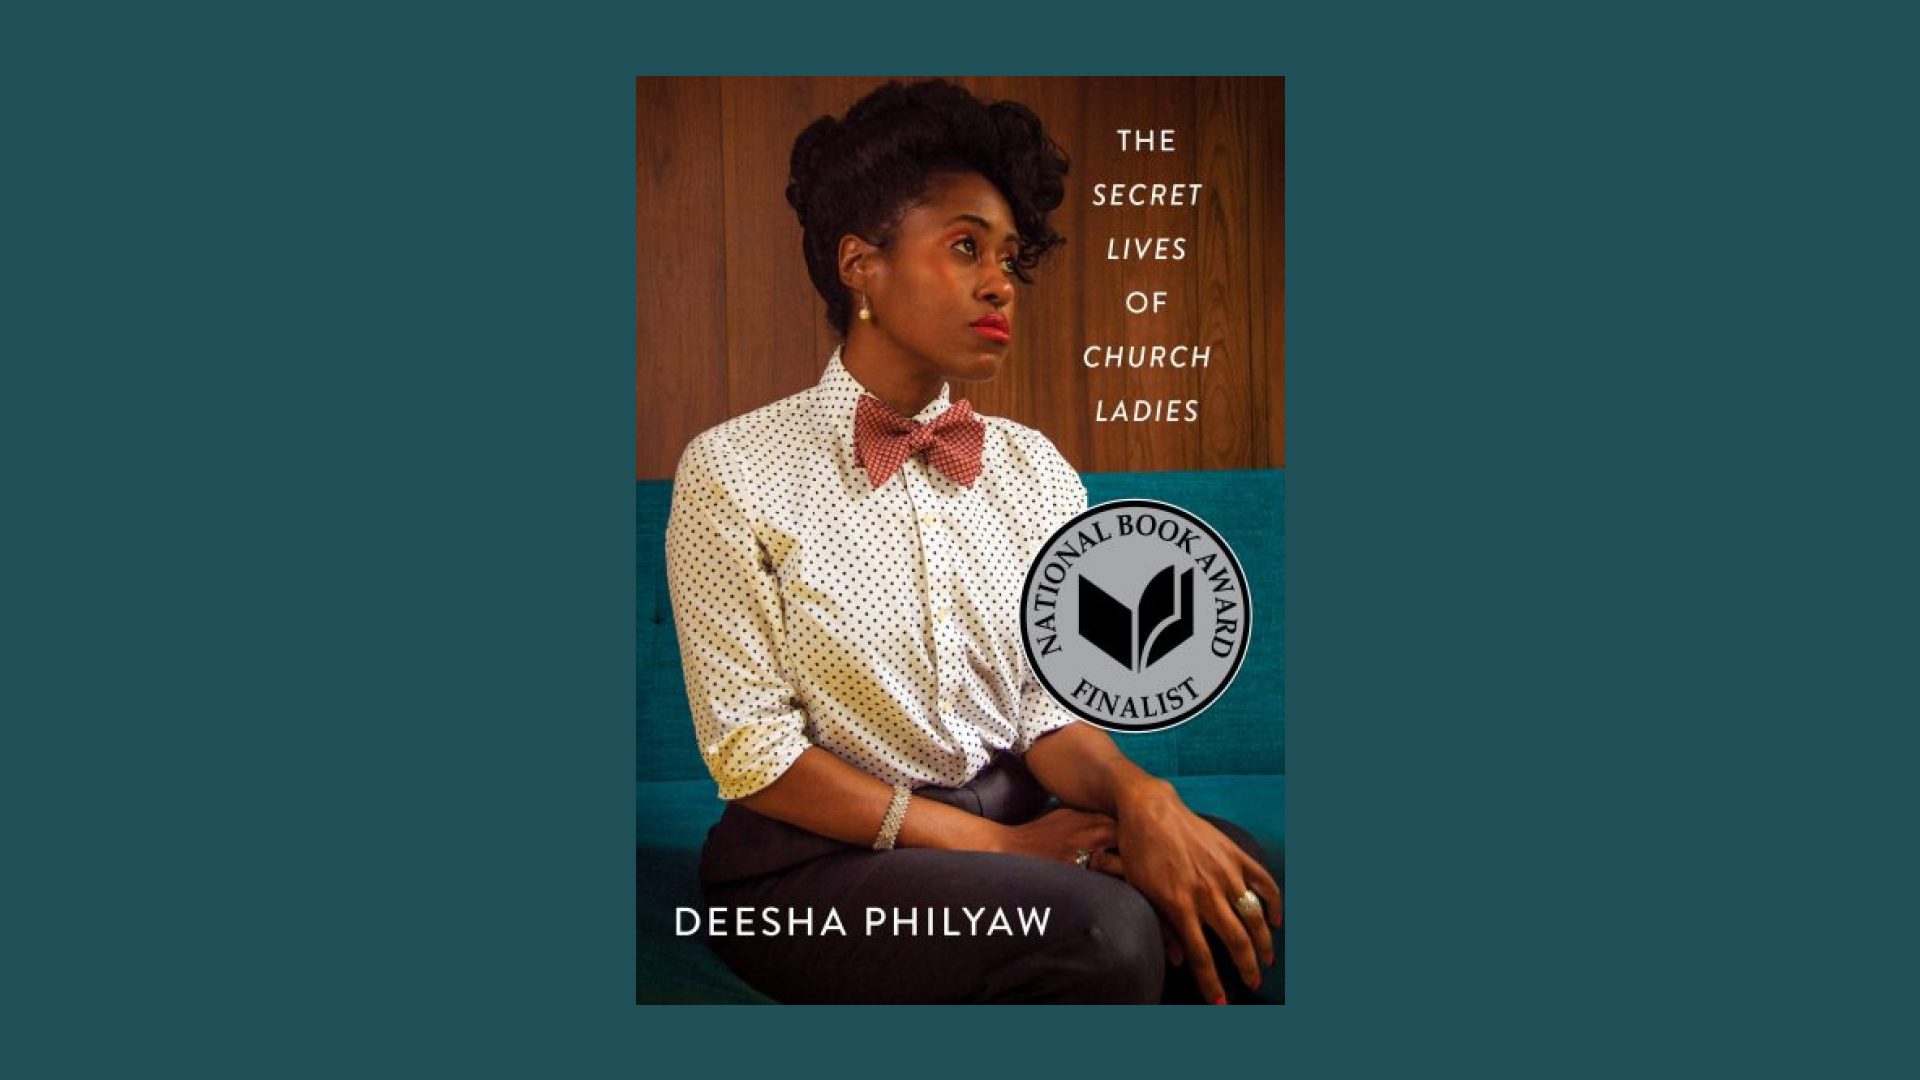 “The Secret Lives of Church Ladies” by Deesha Philyaw